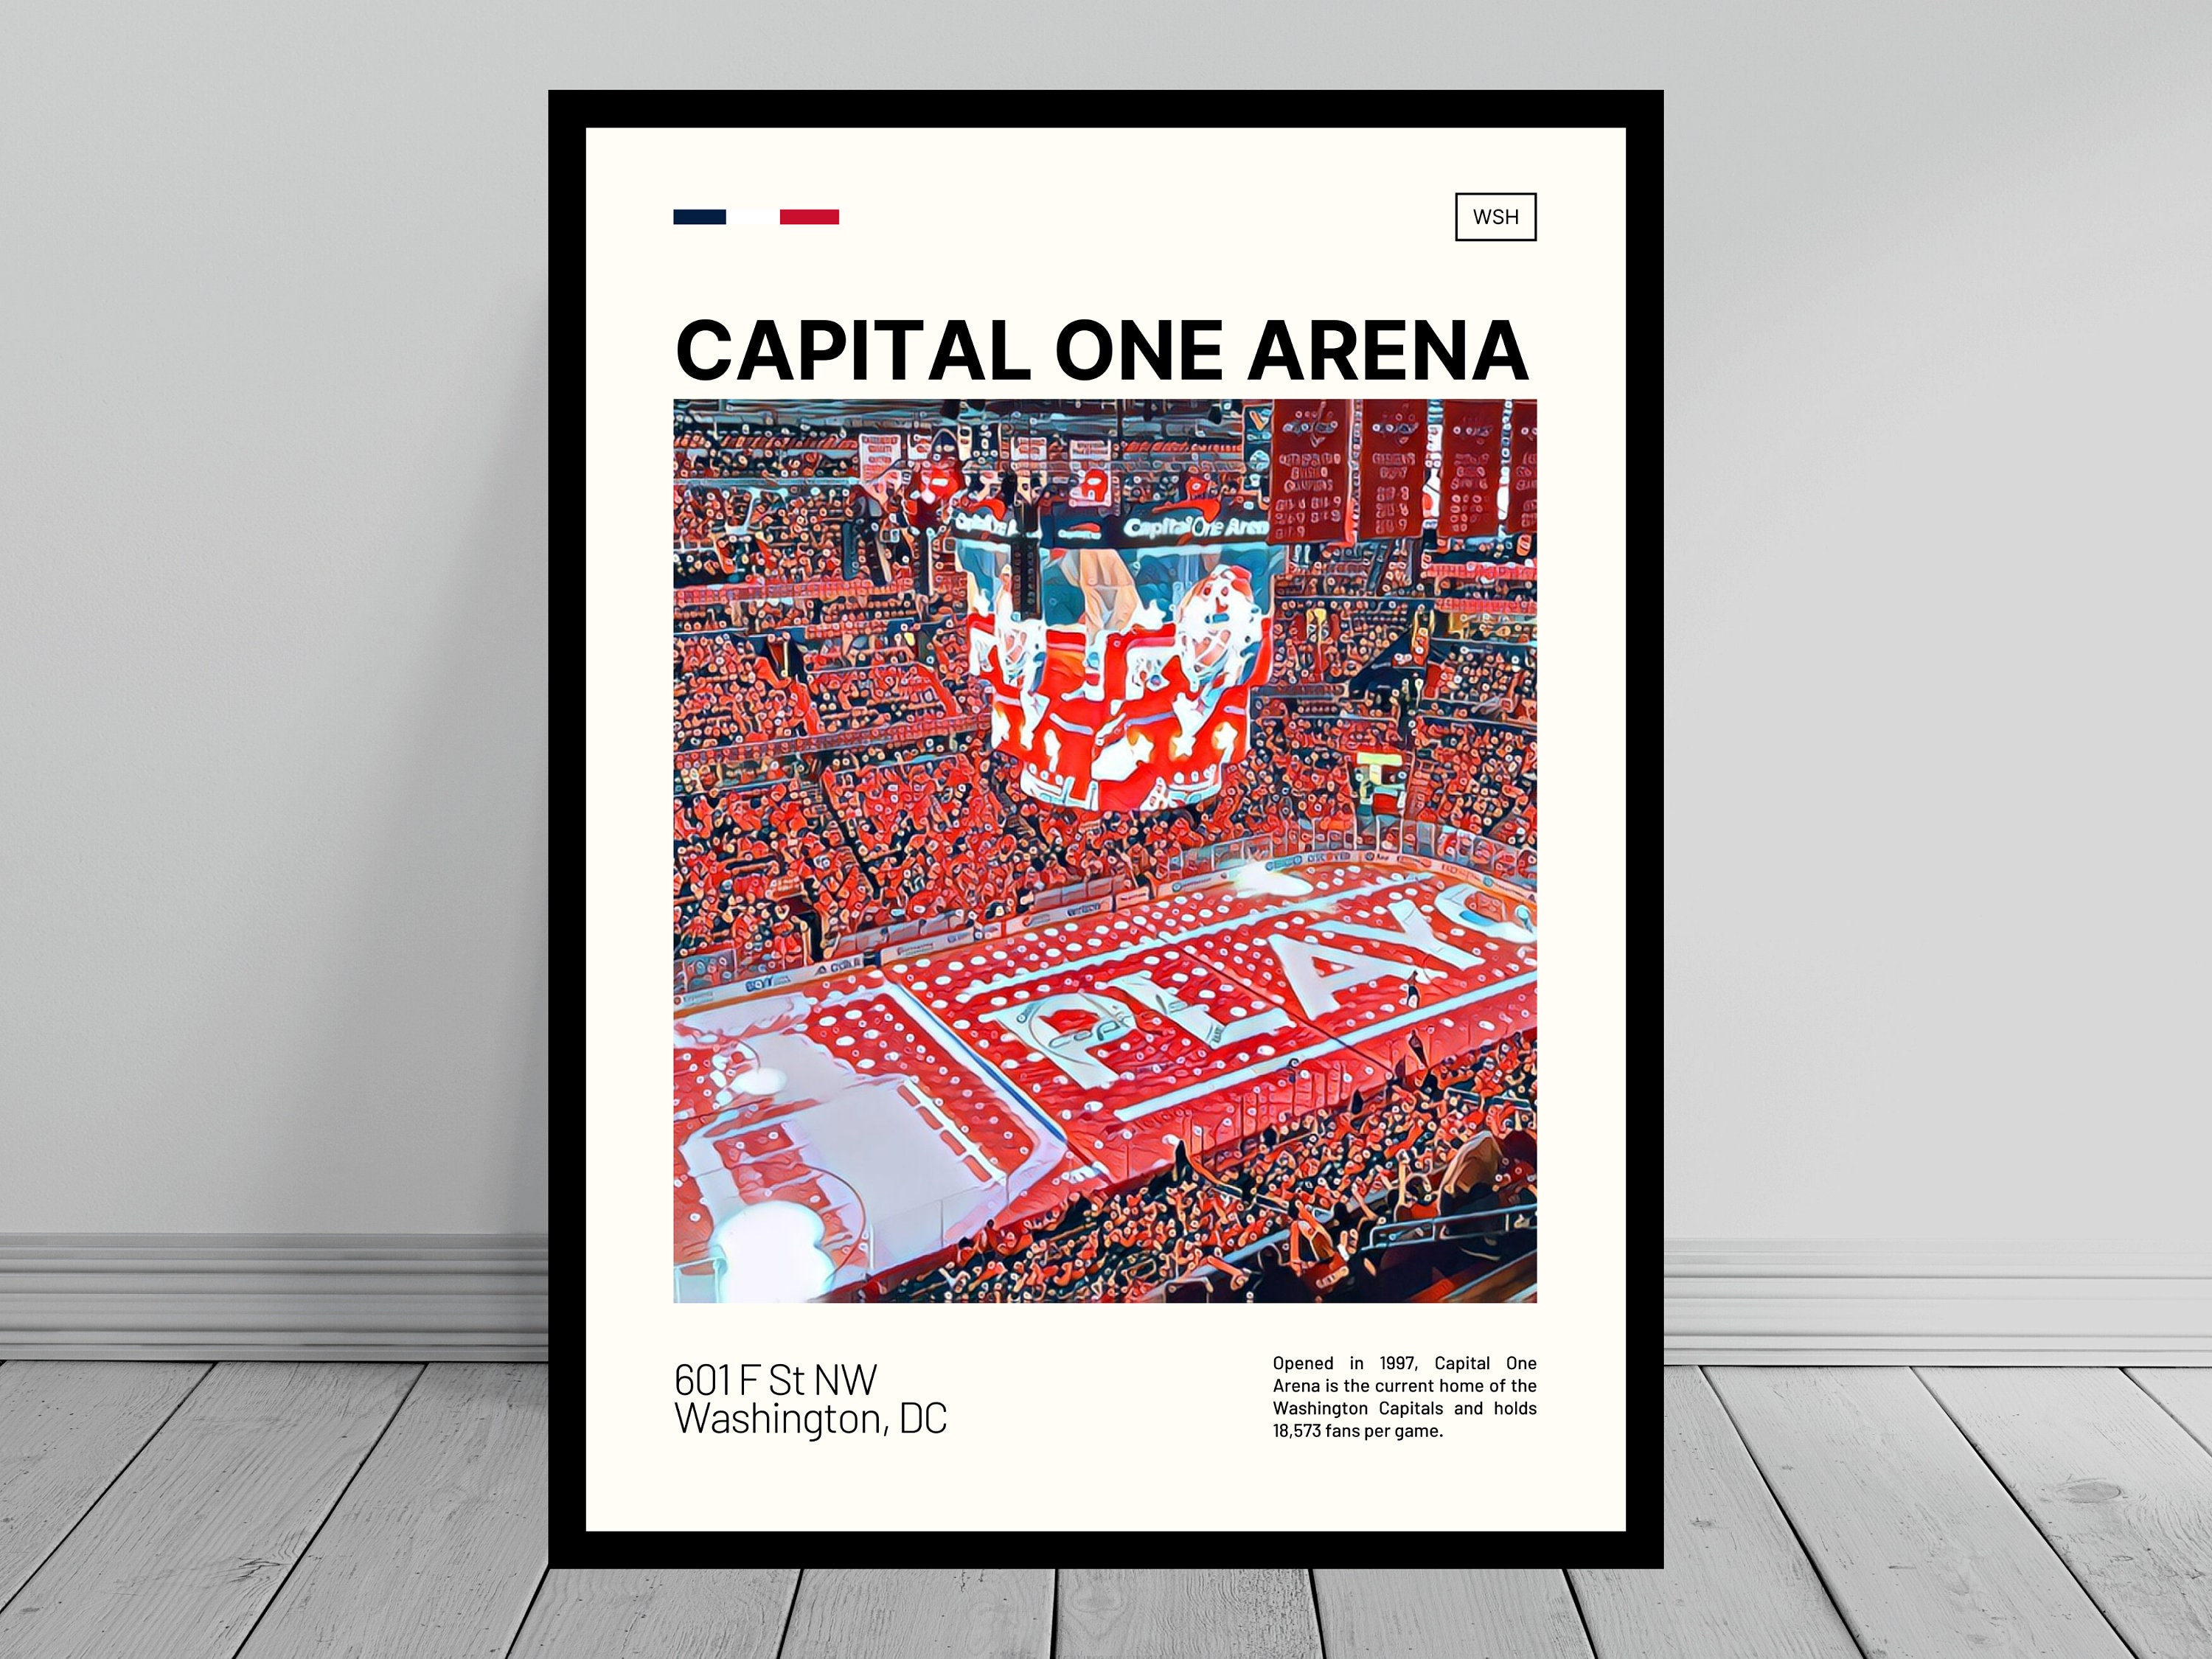 NHL Washington Capitals - T. J. Oshie 15 Wall Poster, 22.375 x 34